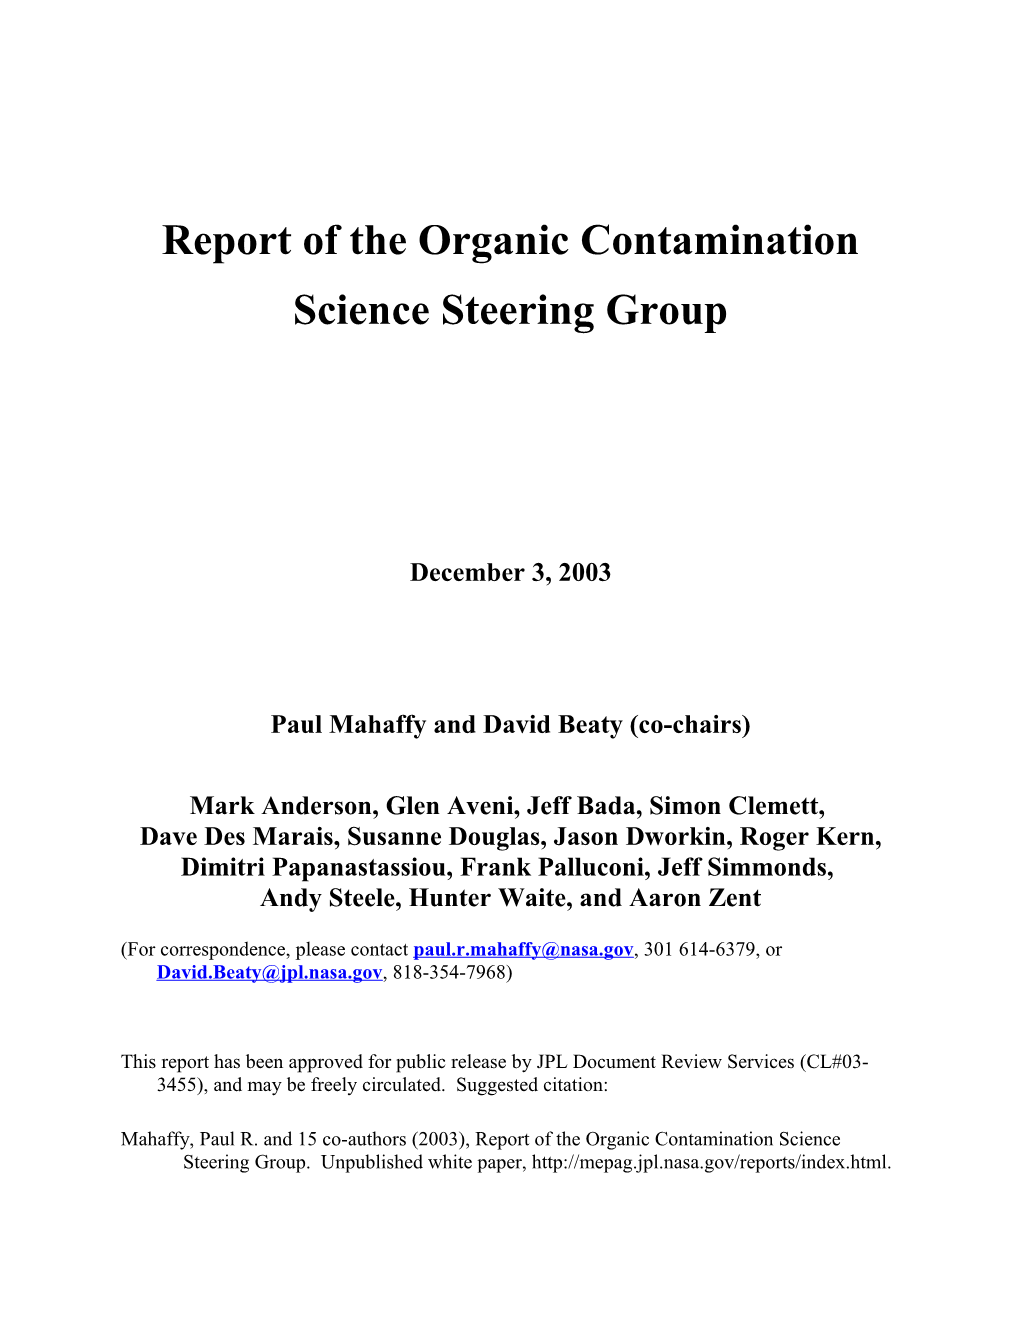 Report of the Spacecraft Organic Contamination